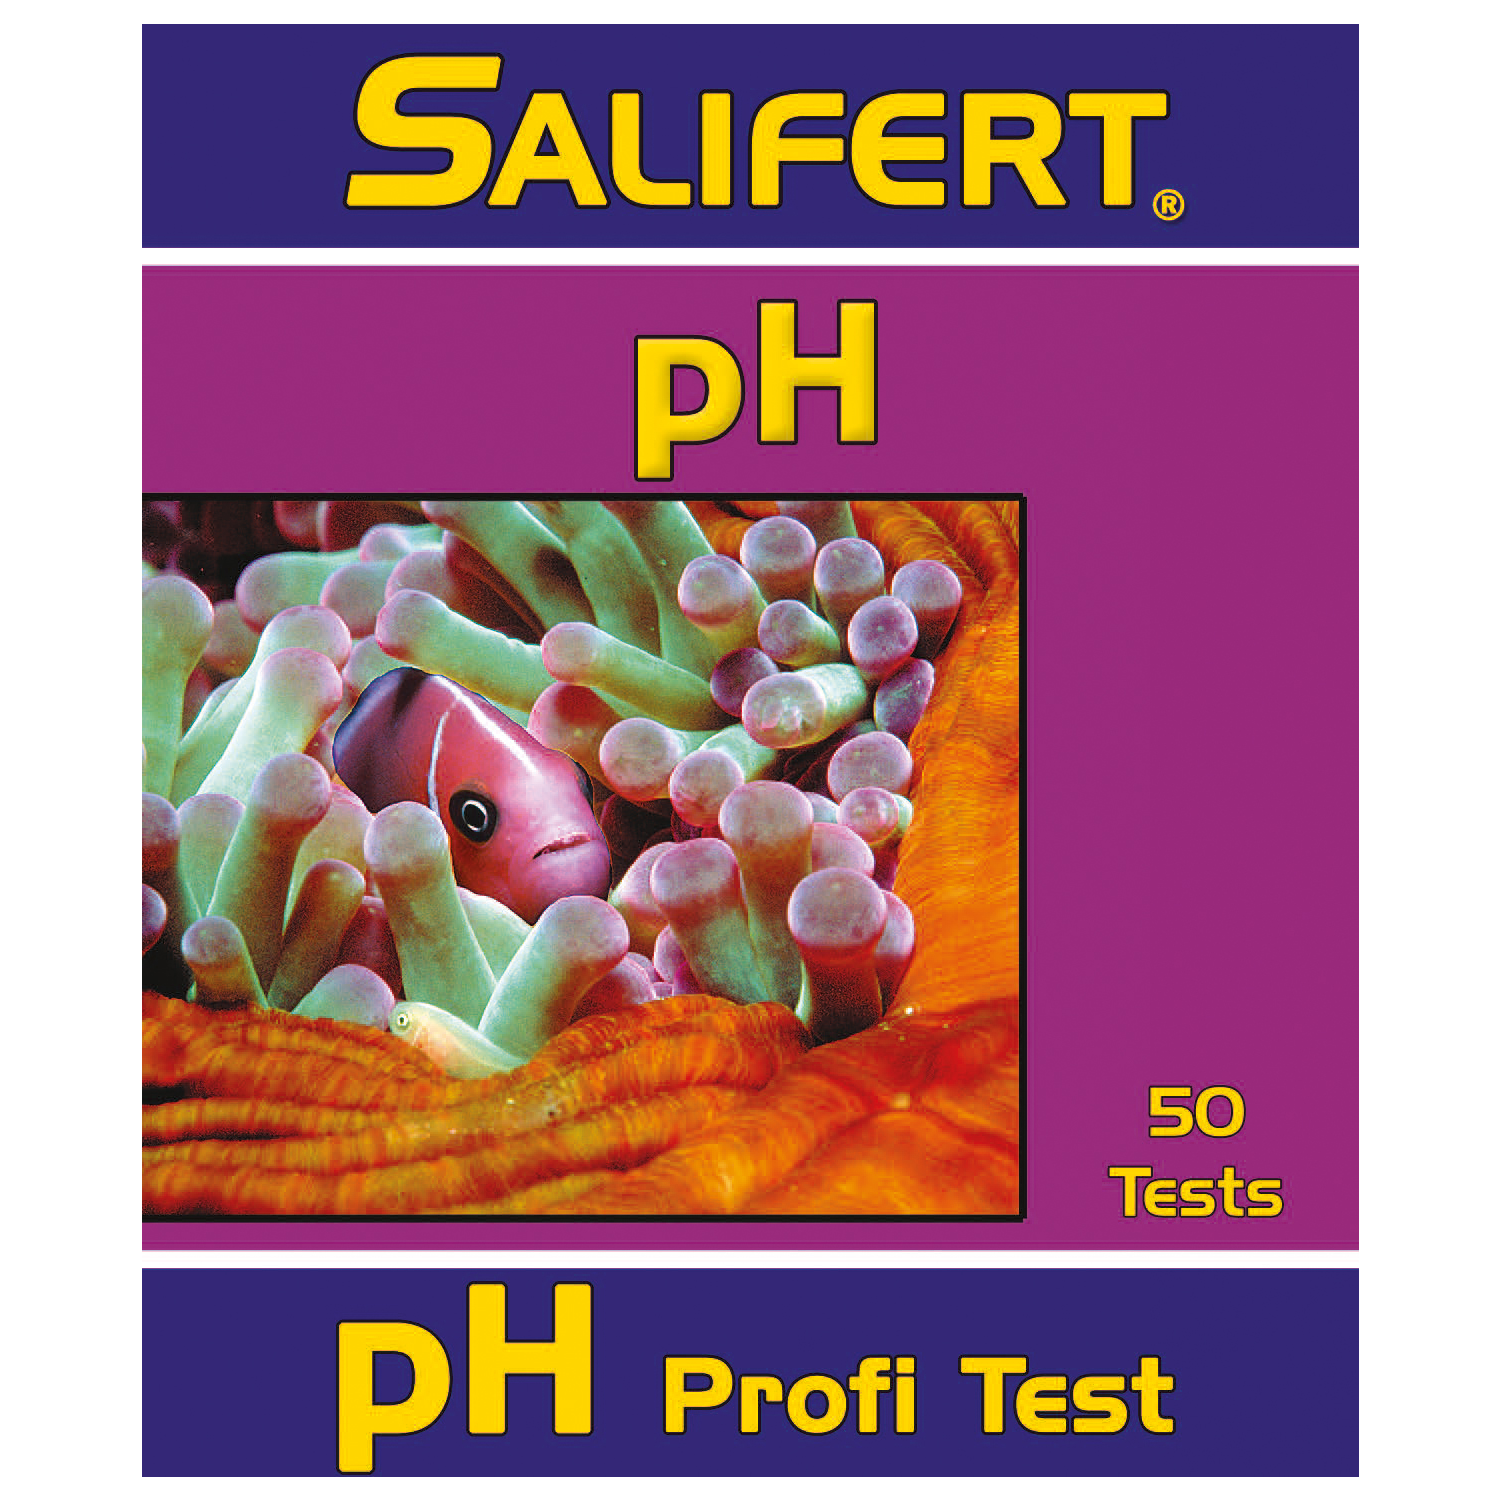 Salifert Nitrat Test-SALIFERT_NO3